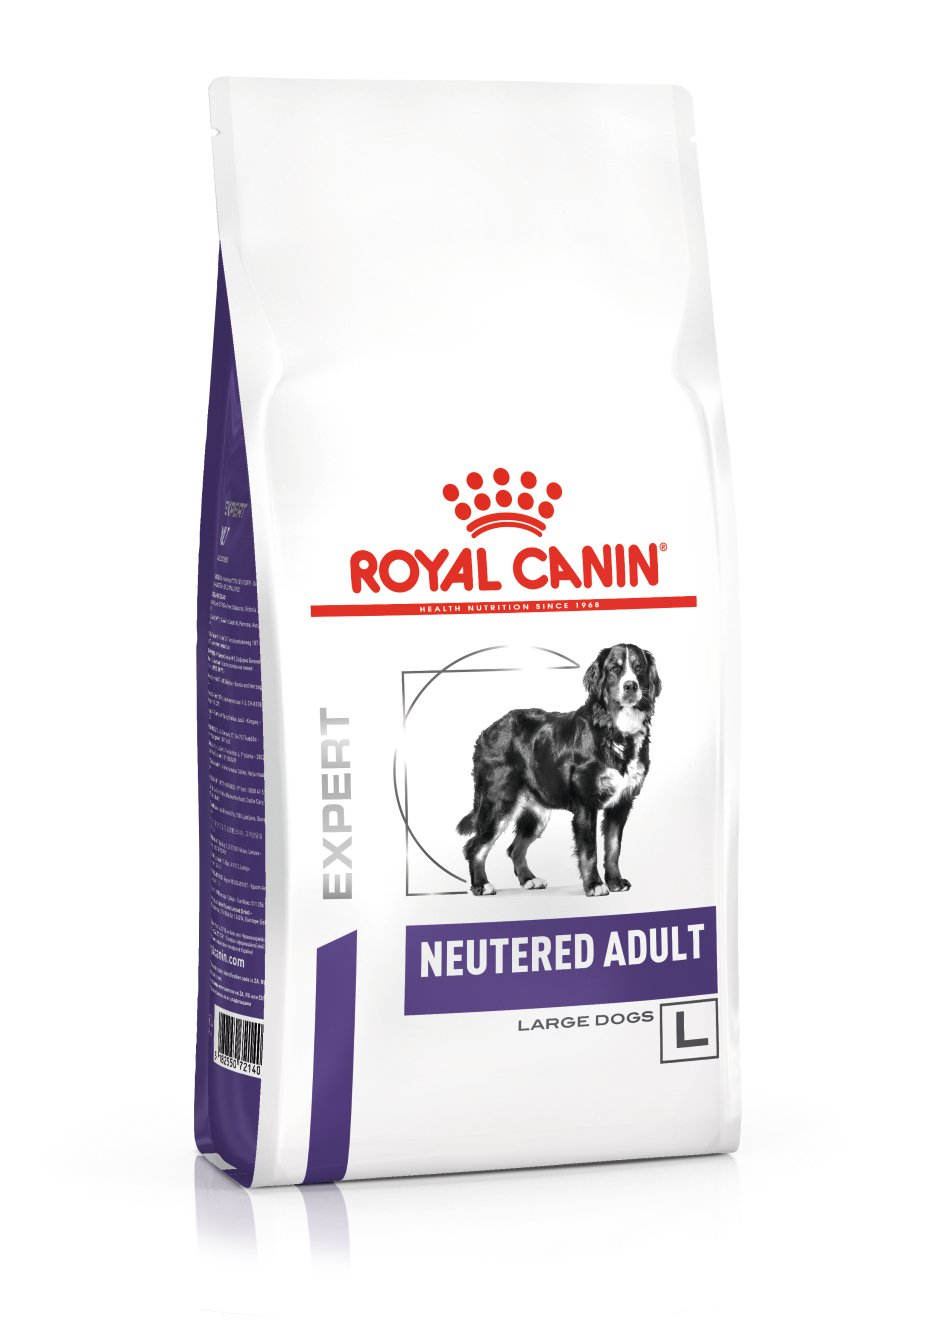 Royal Canin Expert Neutered Adult Large